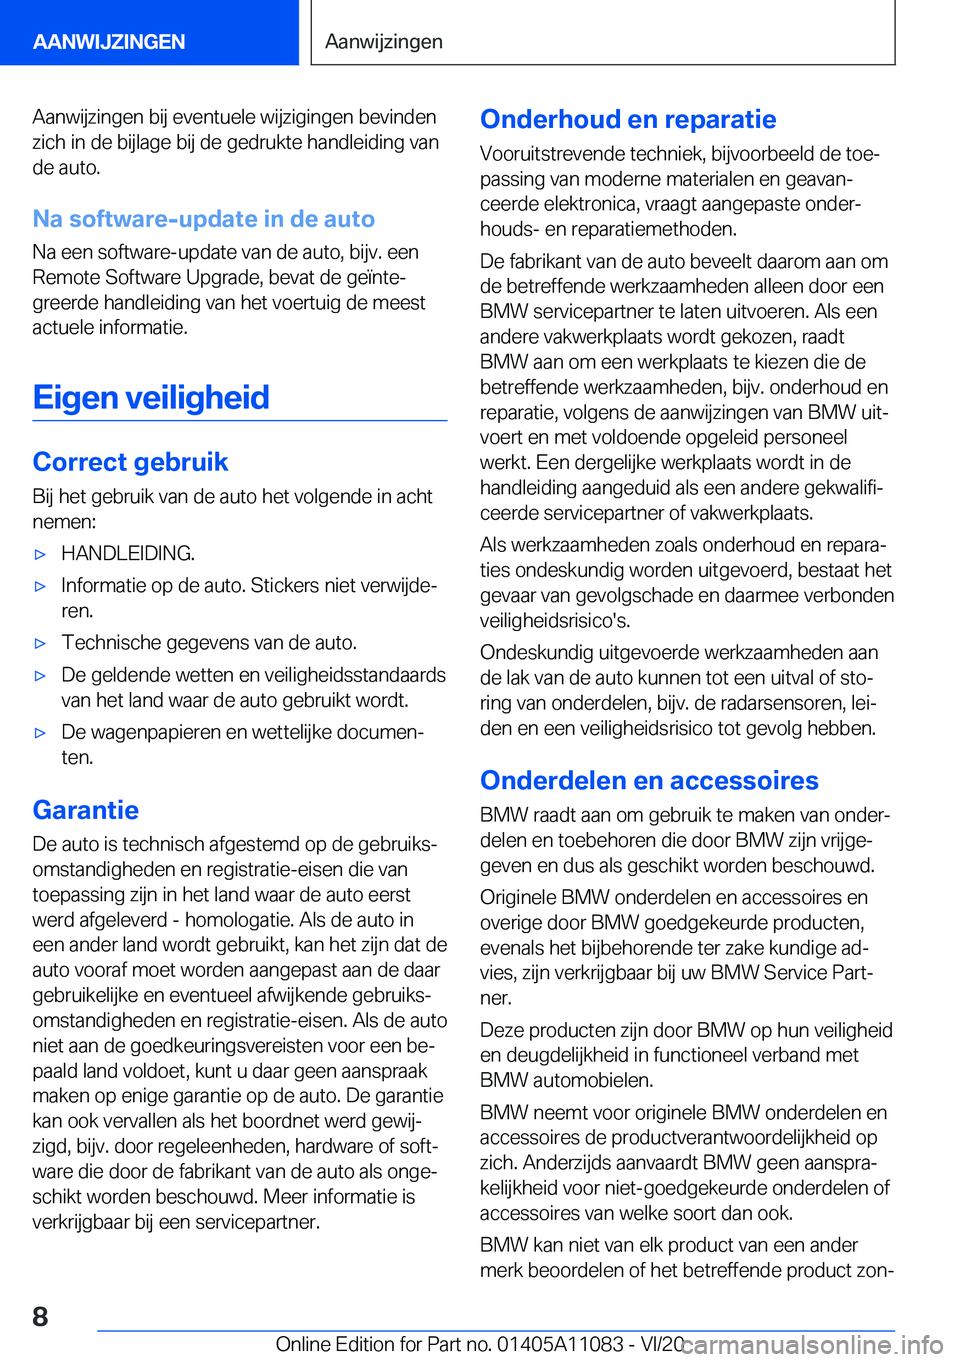 BMW 7 SERIES 2021  Instructieboekjes (in Dutch) �A�a�n�w�i�j�z�i�n�g�e�n��b�i�j��e�v�e�n�t�u�e�l�e��w�i�j�z�i�g�i�n�g�e�n��b�e�v�i�n�d�e�n�z�i�c�h��i�n��d�e��b�i�j�l�a�g�e��b�i�j��d�e��g�e�d�r�u�k�t�e��h�a�n�d�l�e�i�d�i�n�g��v�a�n
�d�e�